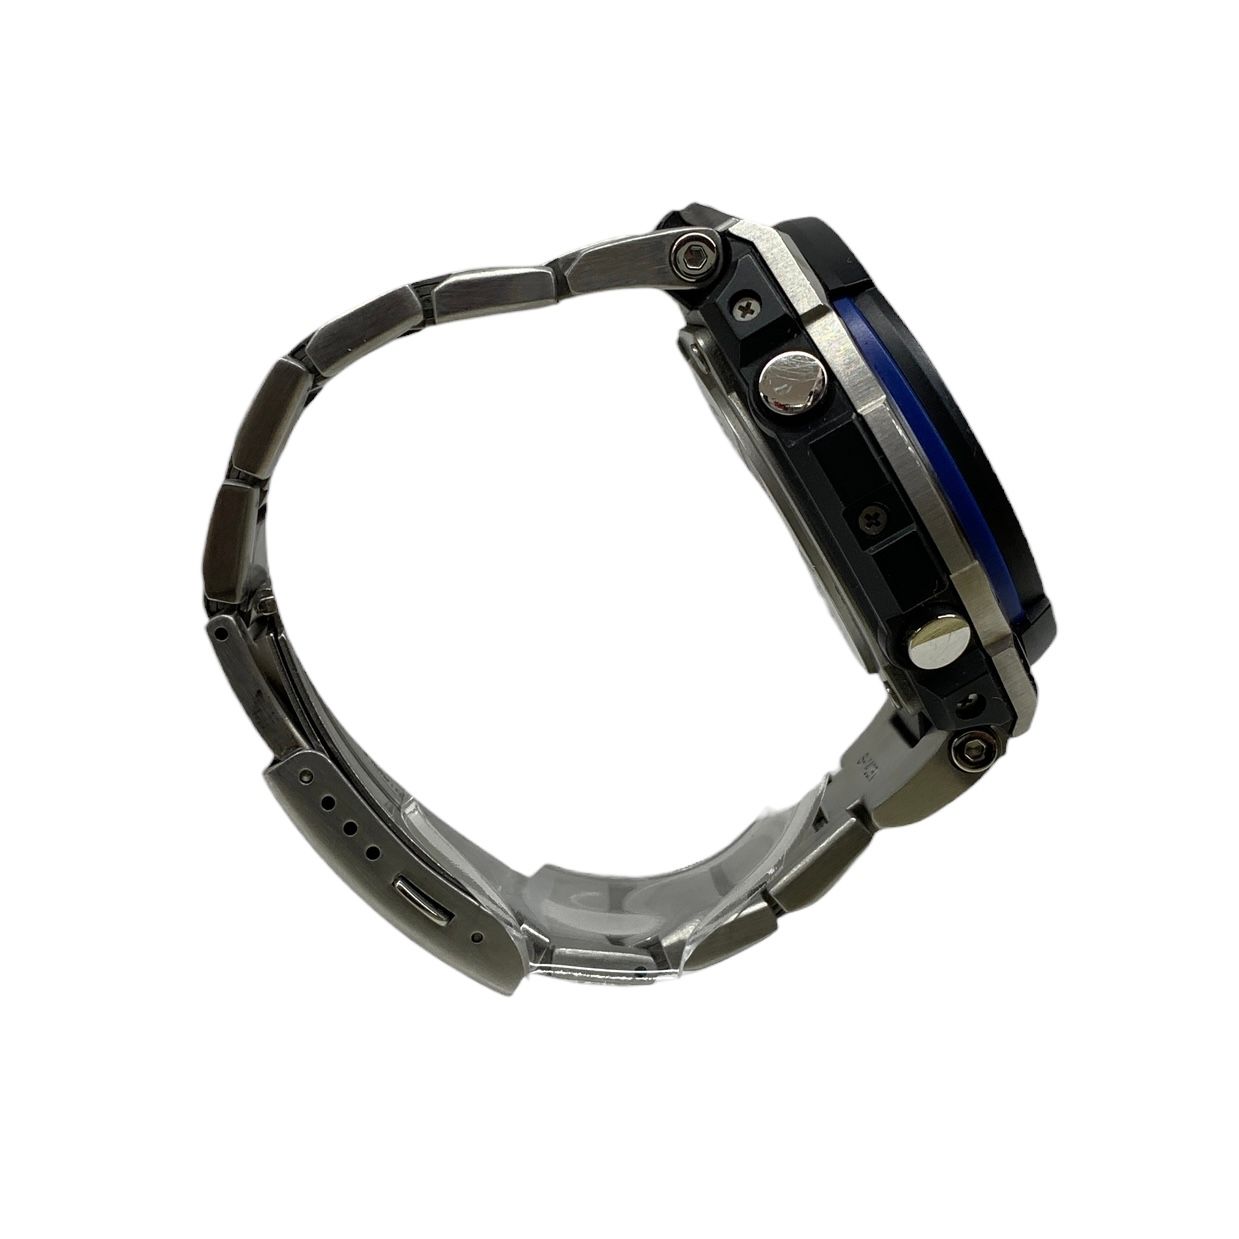 CASIO (カシオ) G-SHOCK Gショック G-STEEL Gスチール デジアナ腕時計 電波ソーラー GST-W100D シルバー ブラック  ブルー メンズ/025 - メルカリ